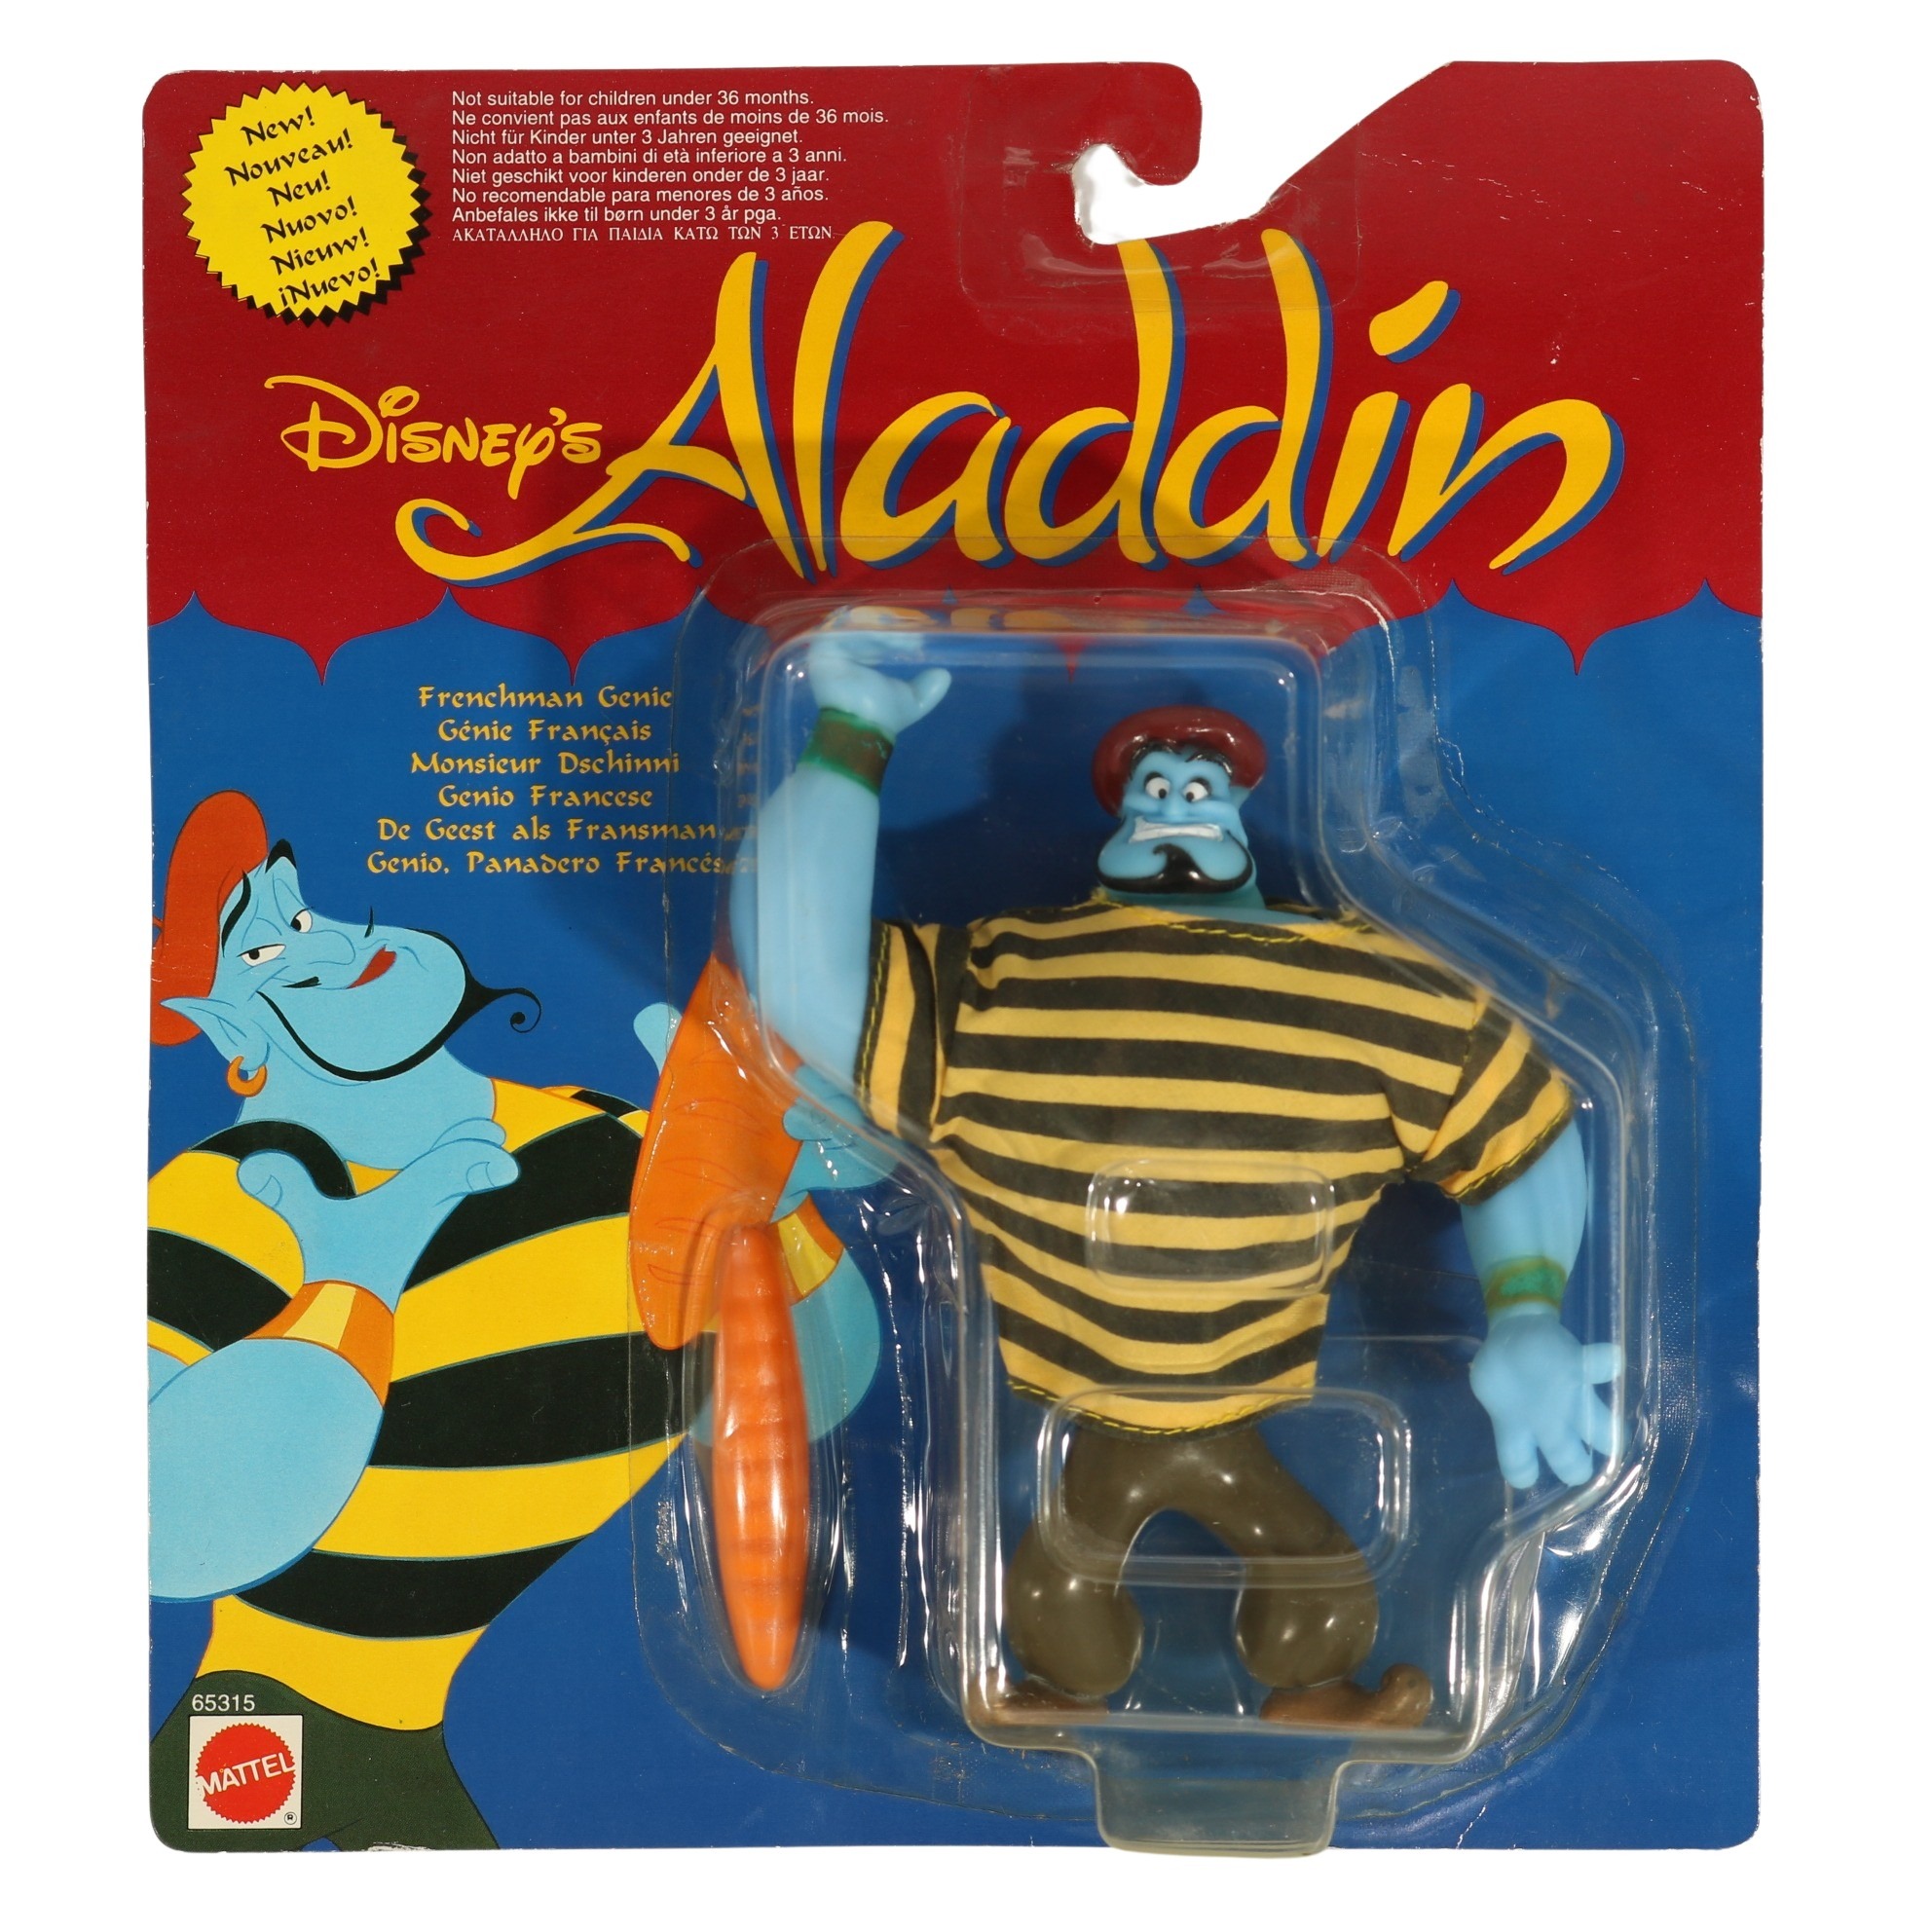 Disney Mattel - Aladdin - Frenchman Genie / Dschinni - MOC